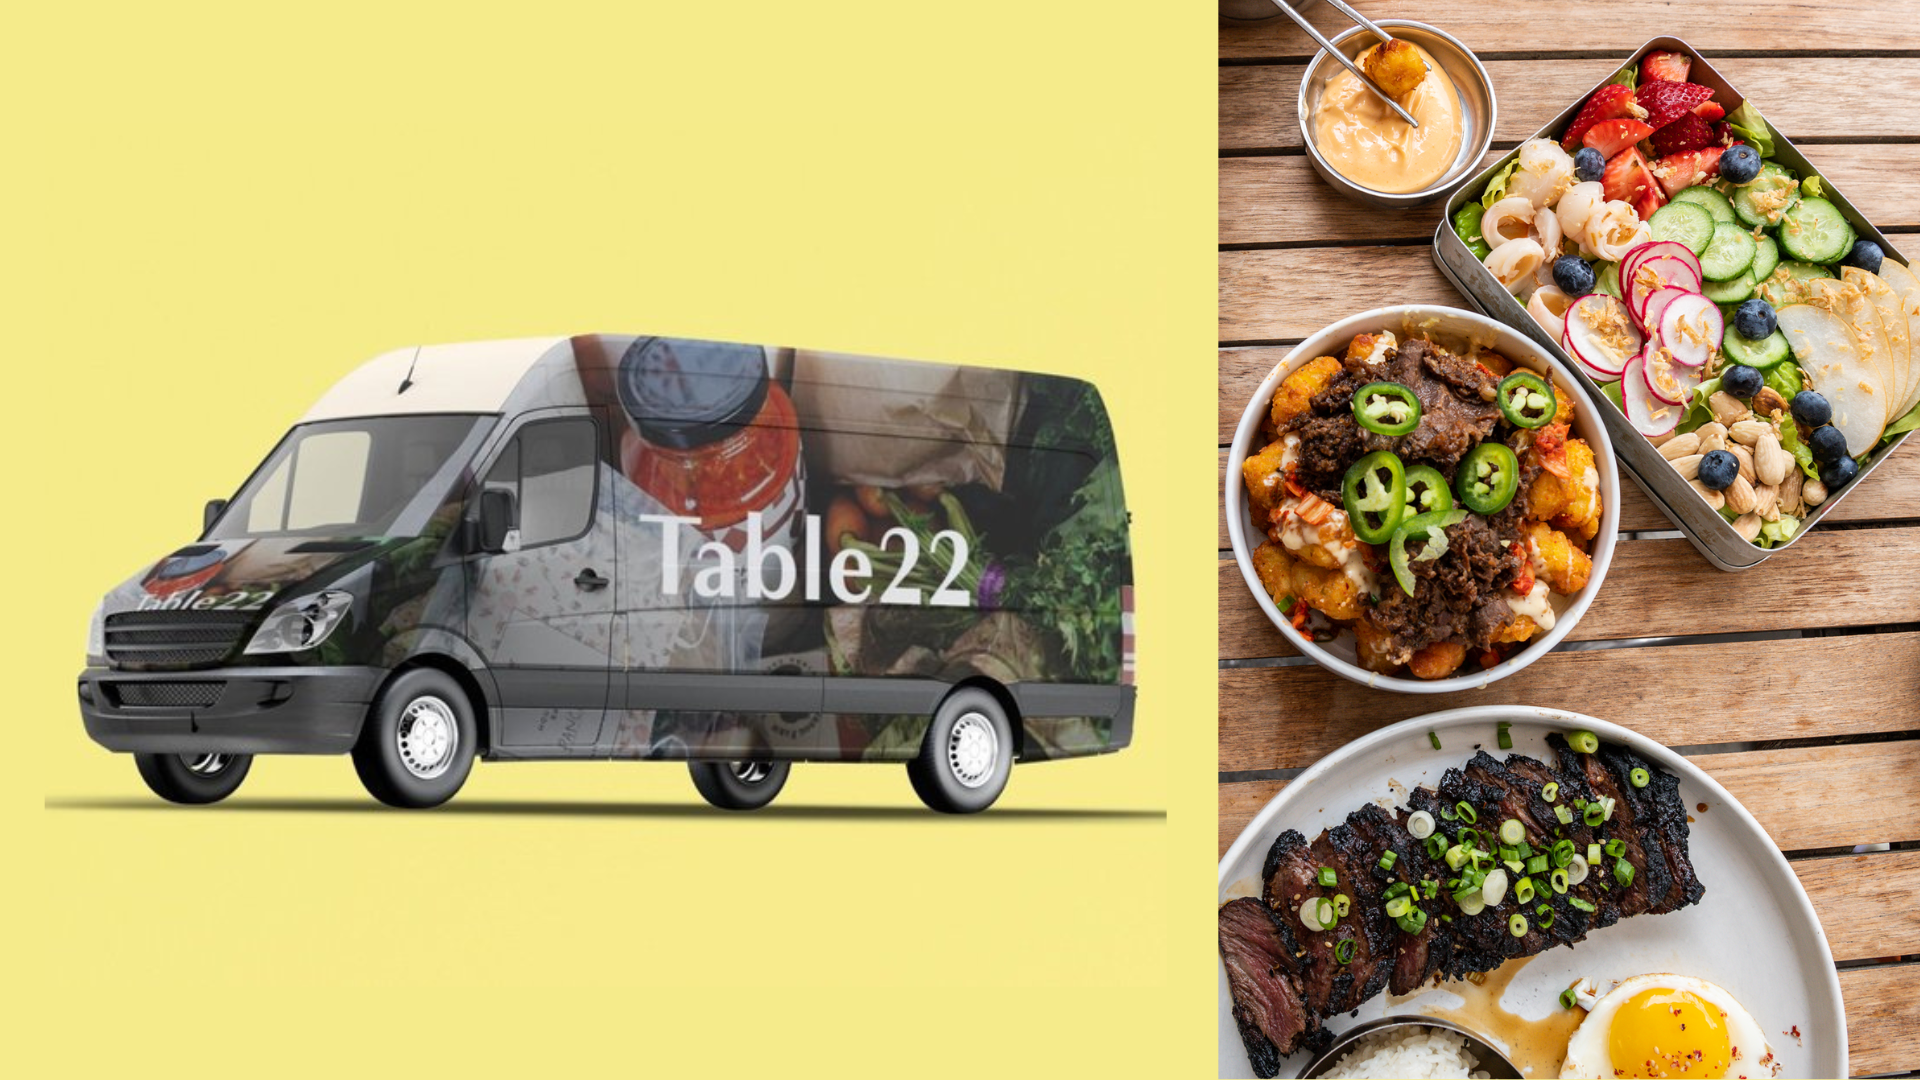 Table22 Delivery Van